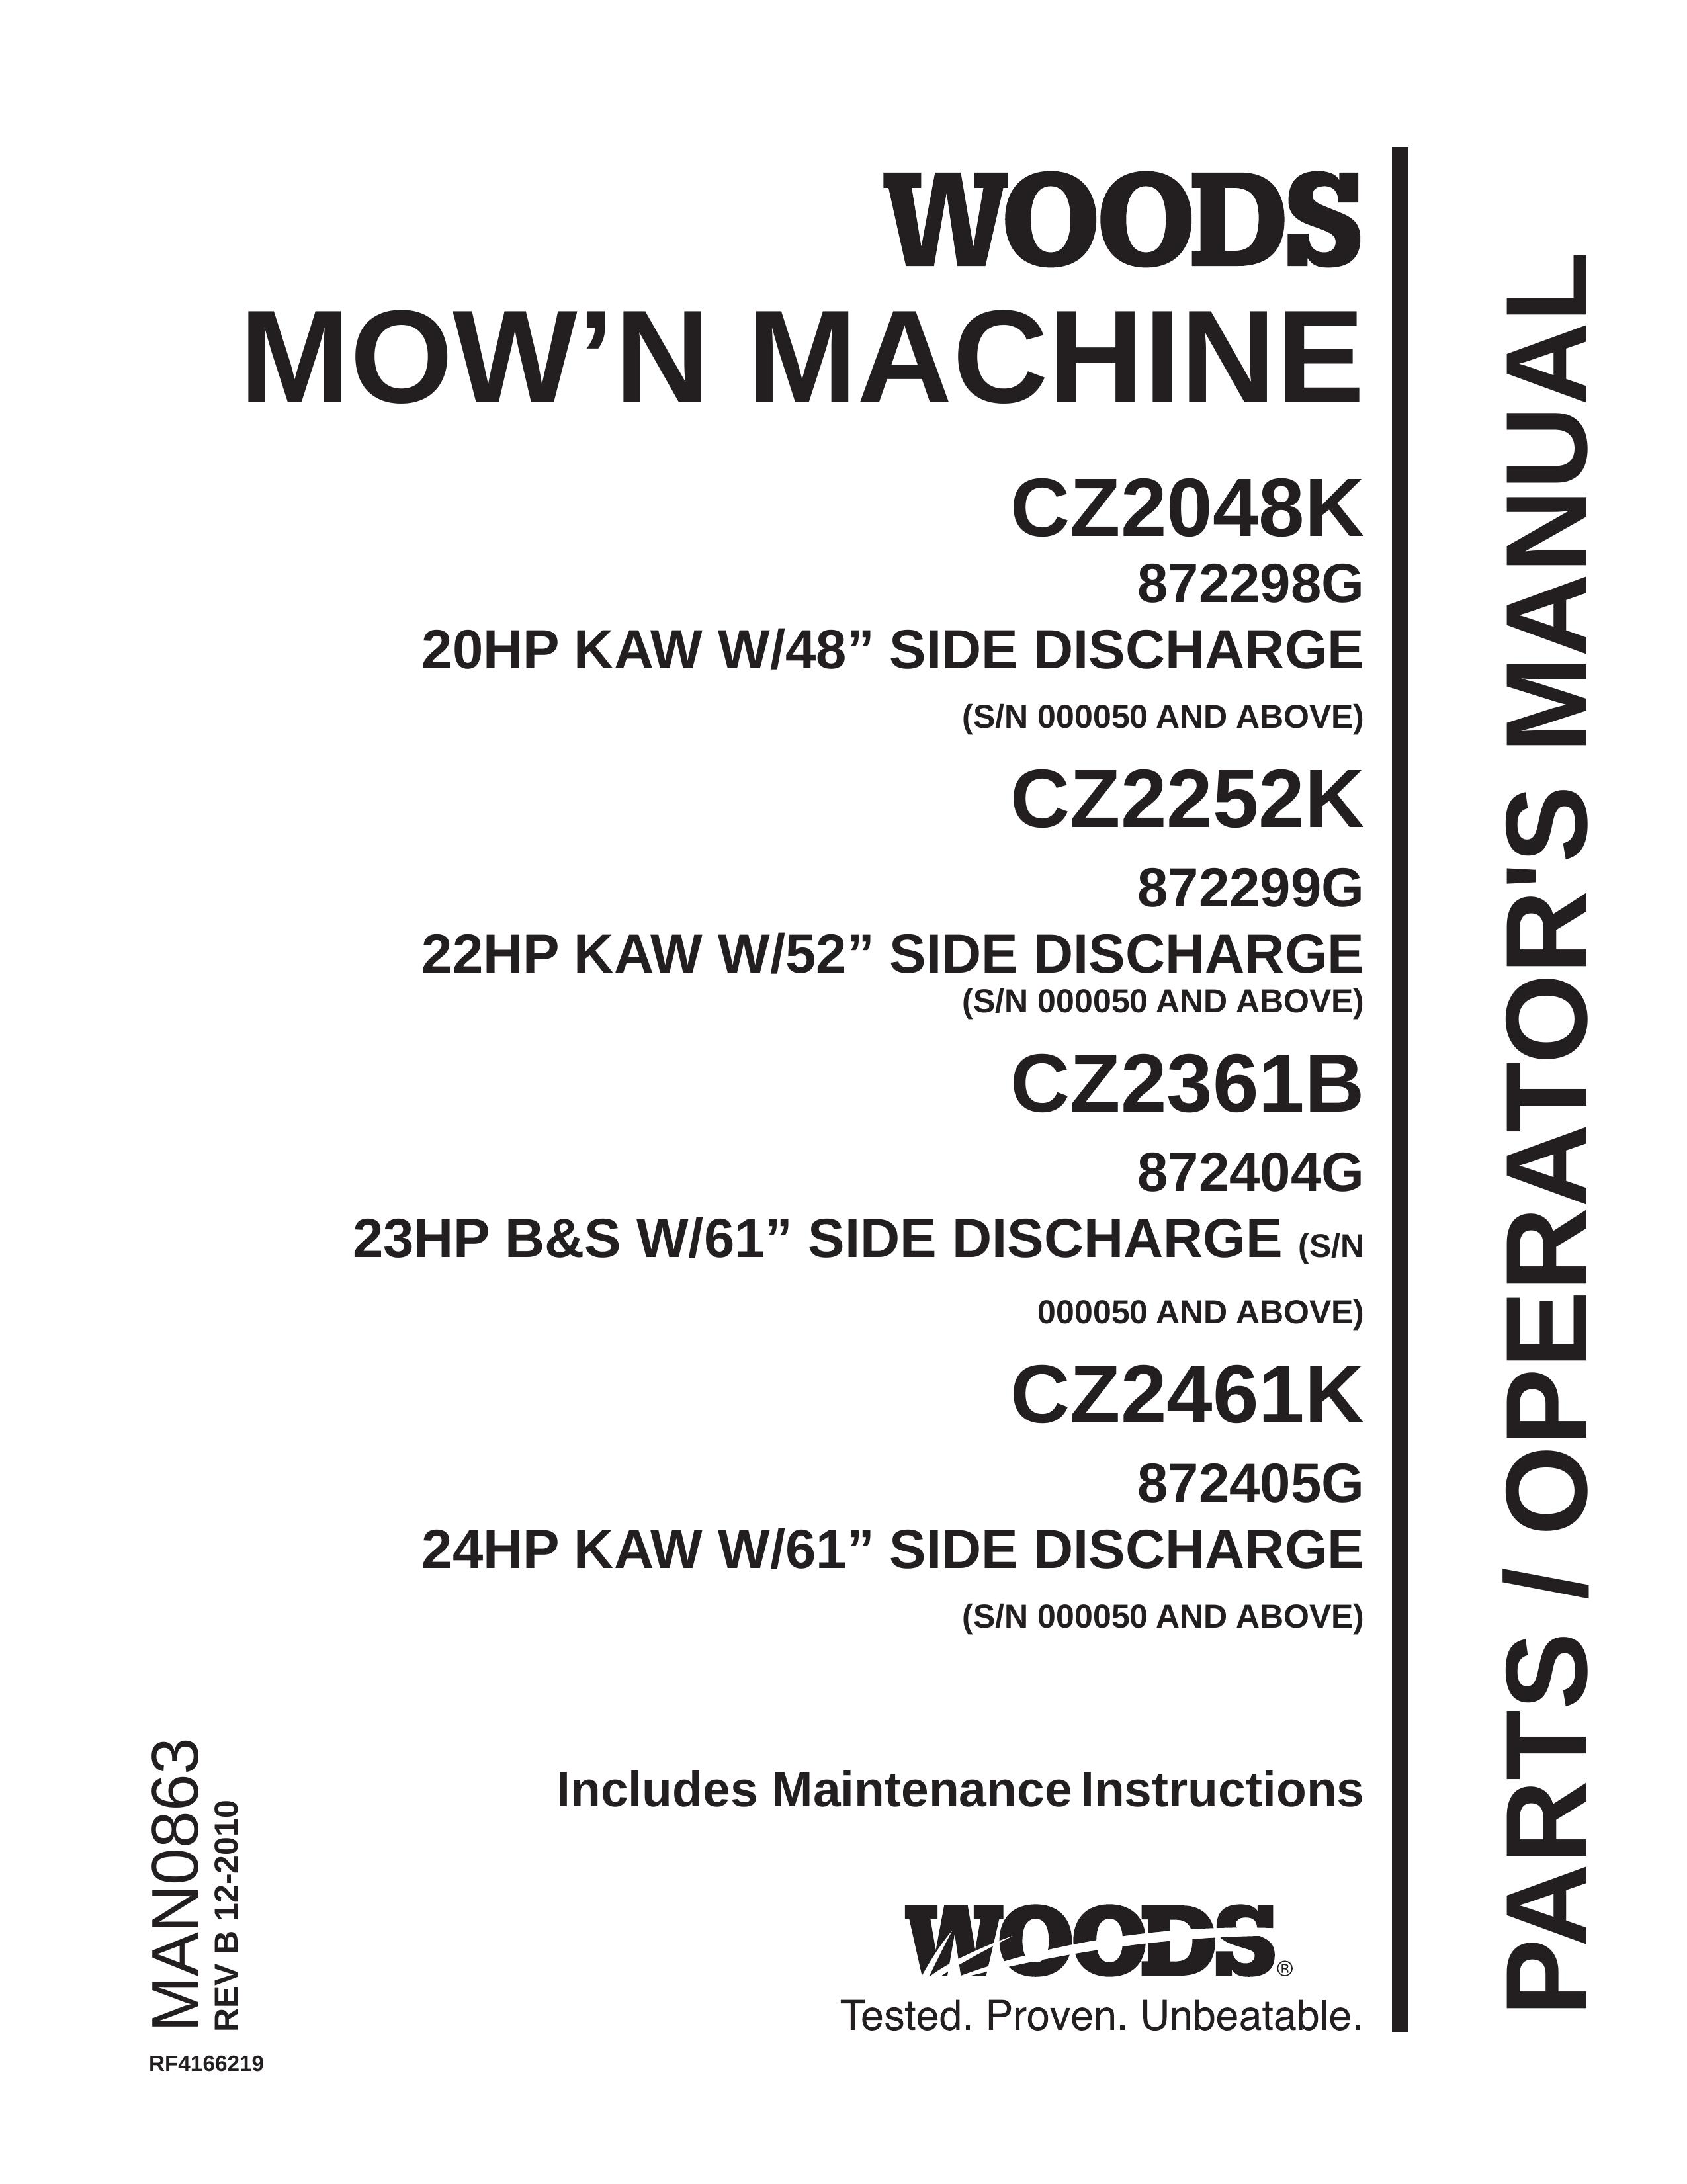 Woods Equipment CZ2461K Lawn Mower User Manual